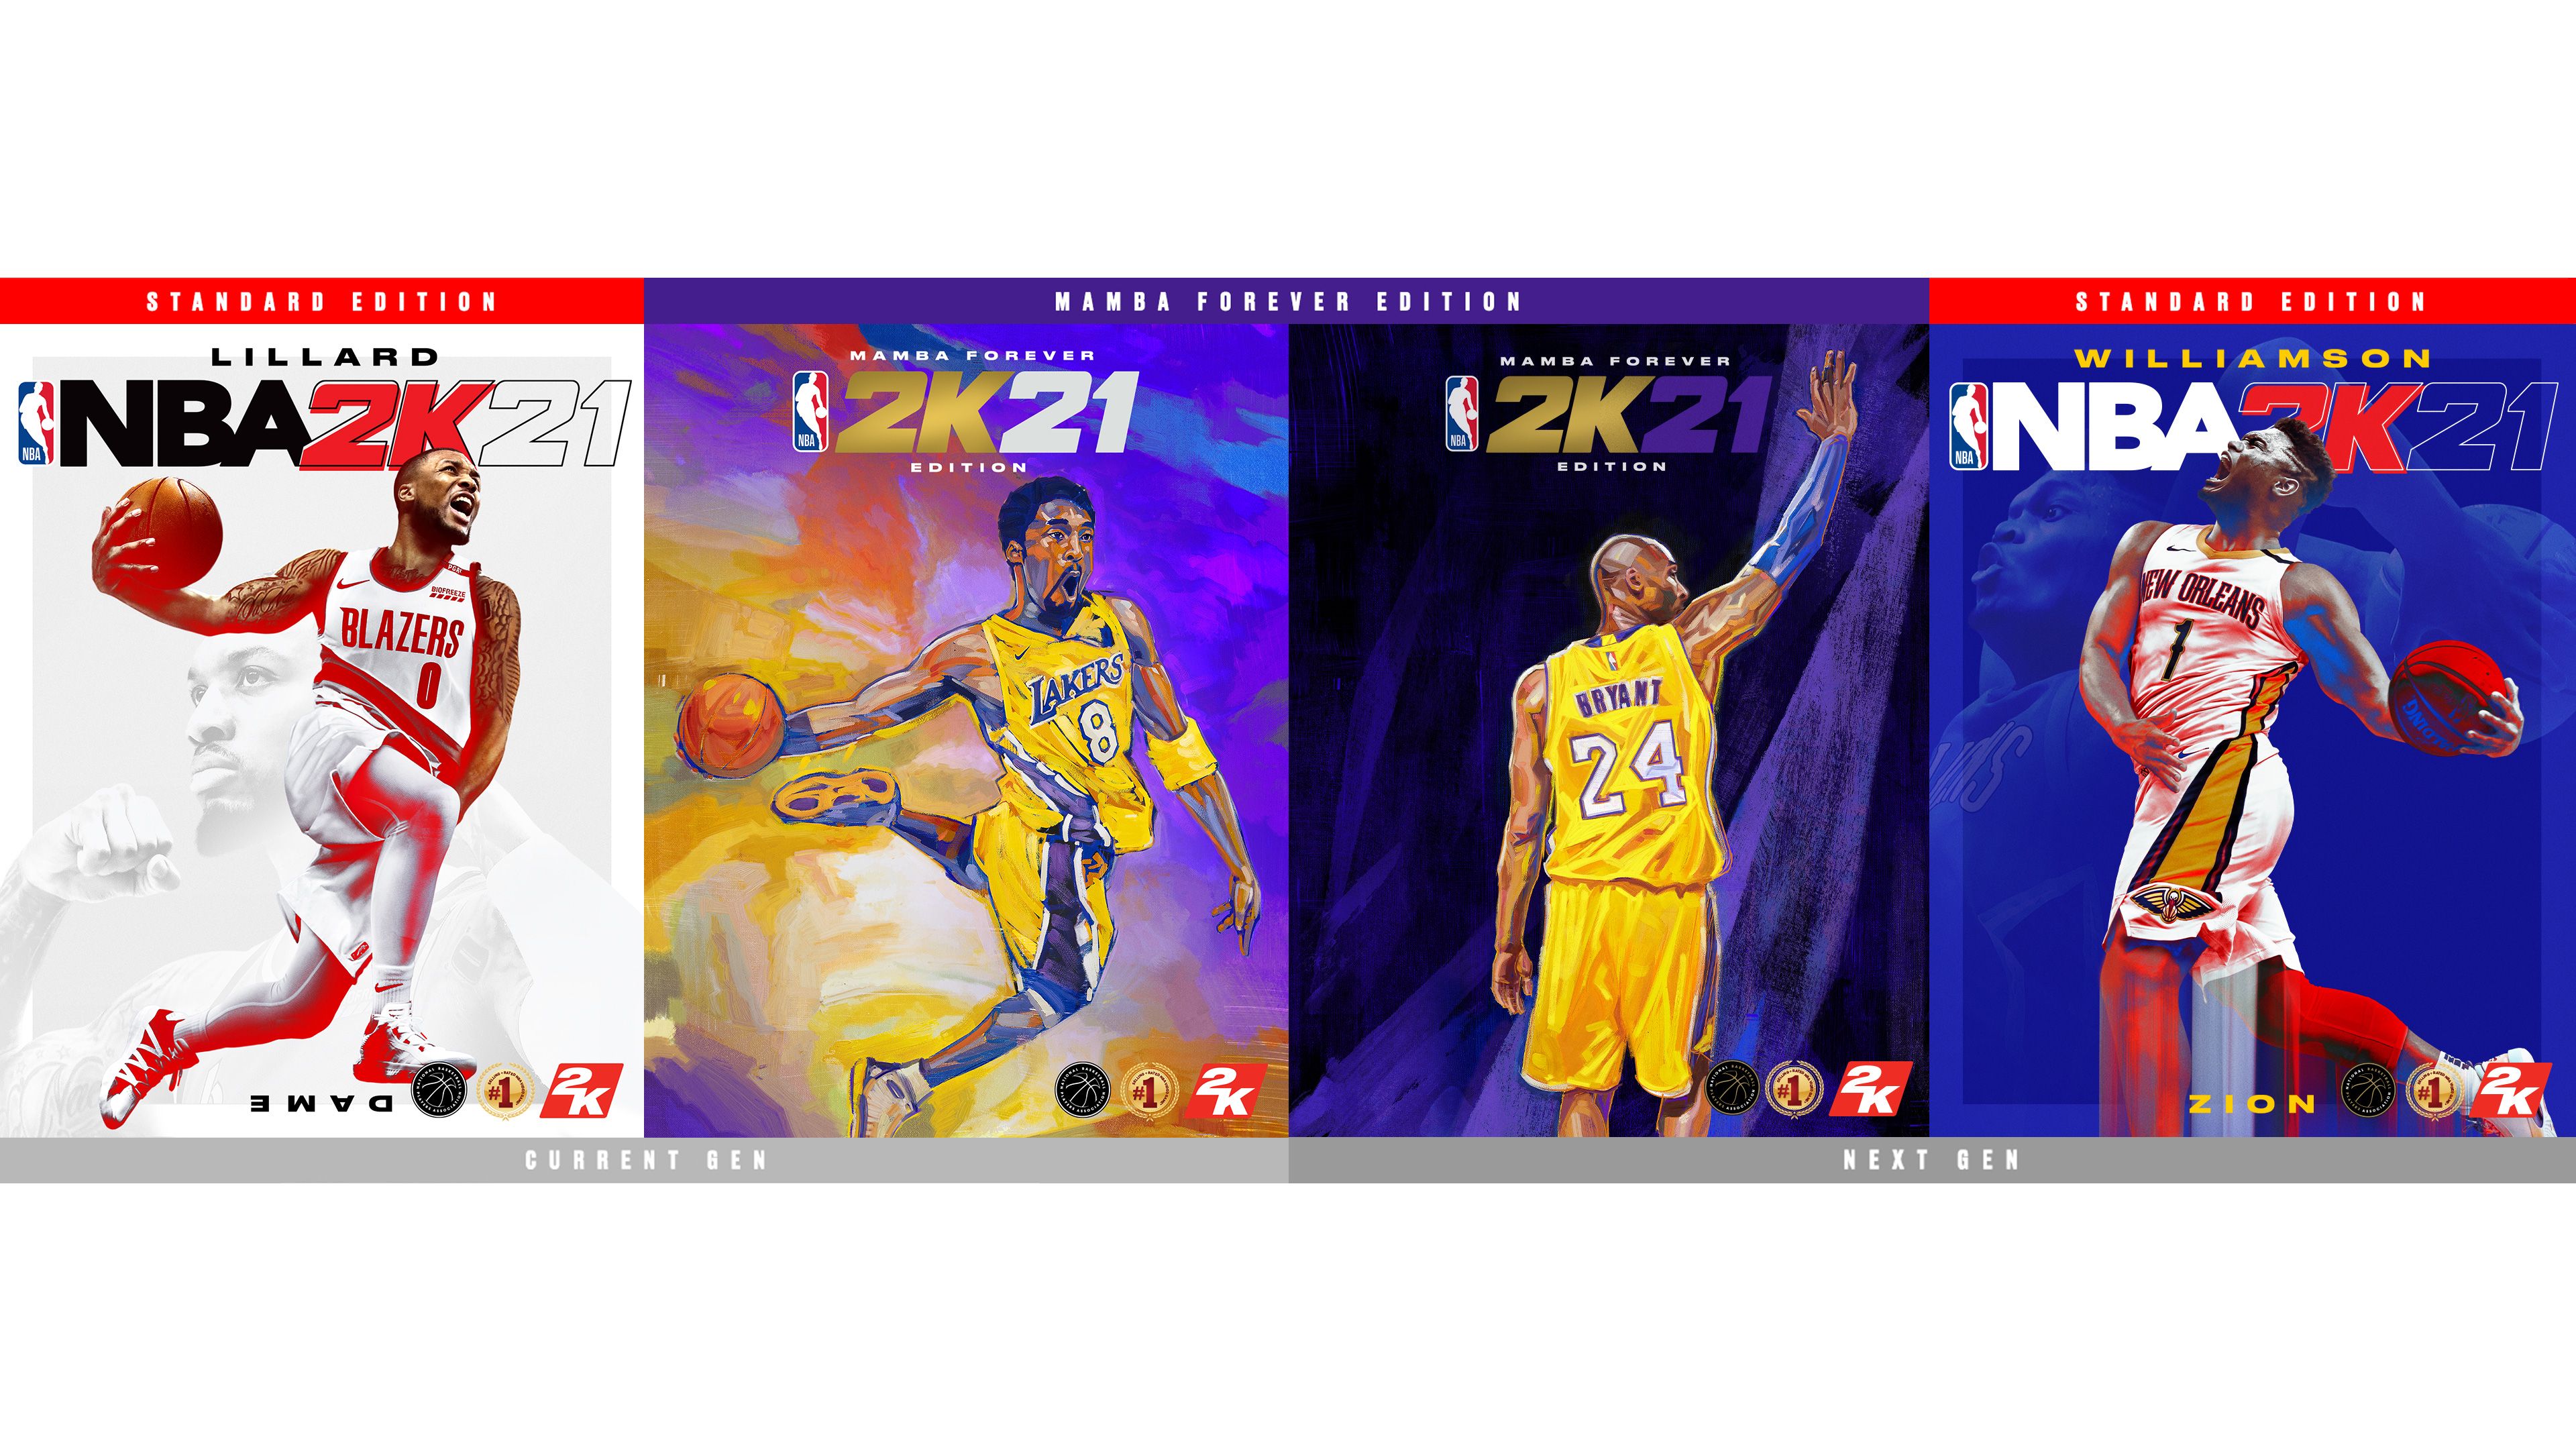 《NBA 2K21》9月4日發售 紀念科比推出“曼巴永恆版”